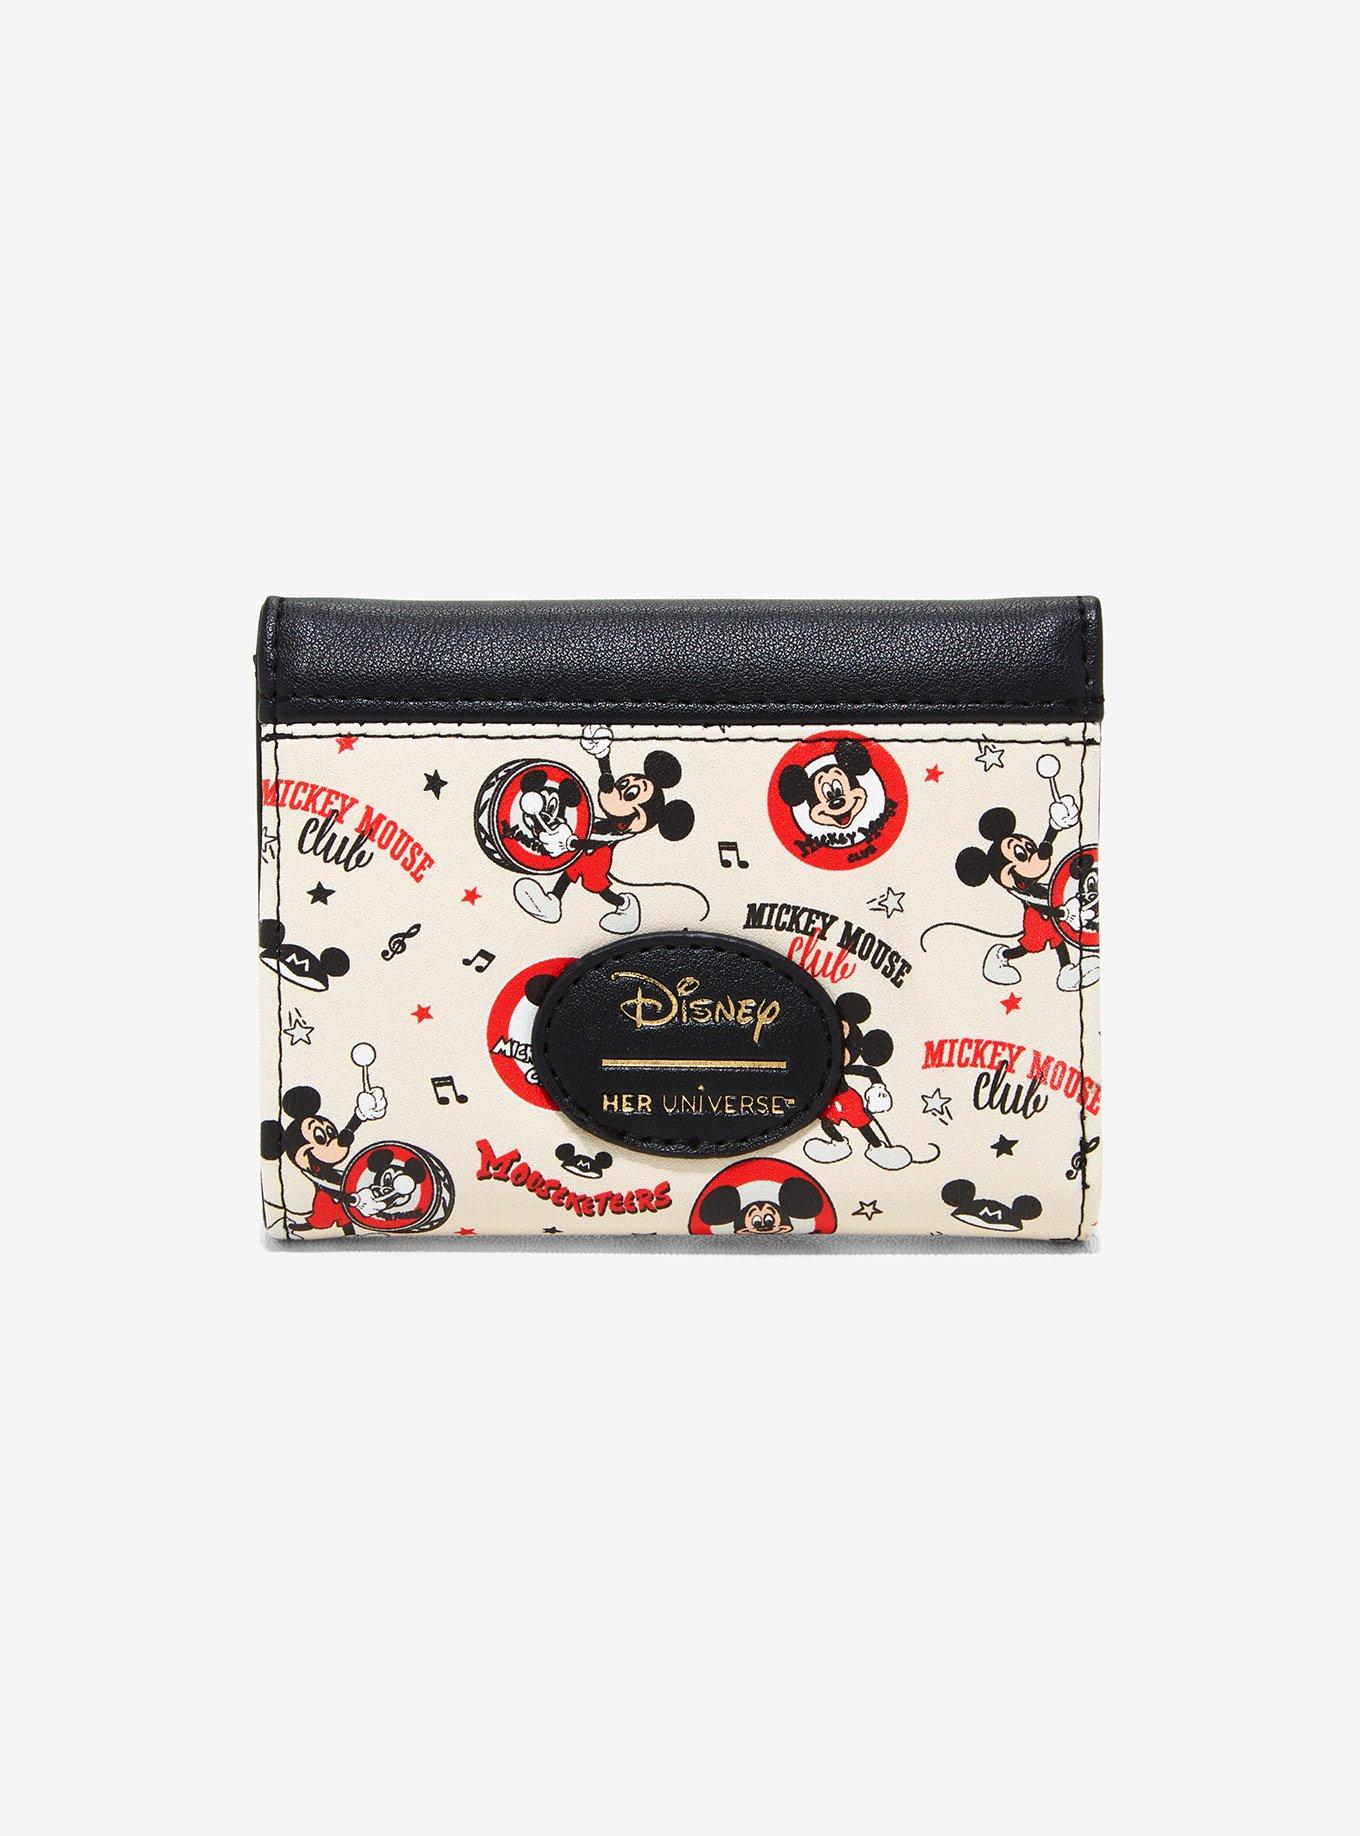 Her Universe Disney100 Mickey Mouse Club Vintage Mini Flap Wallet, , alternate